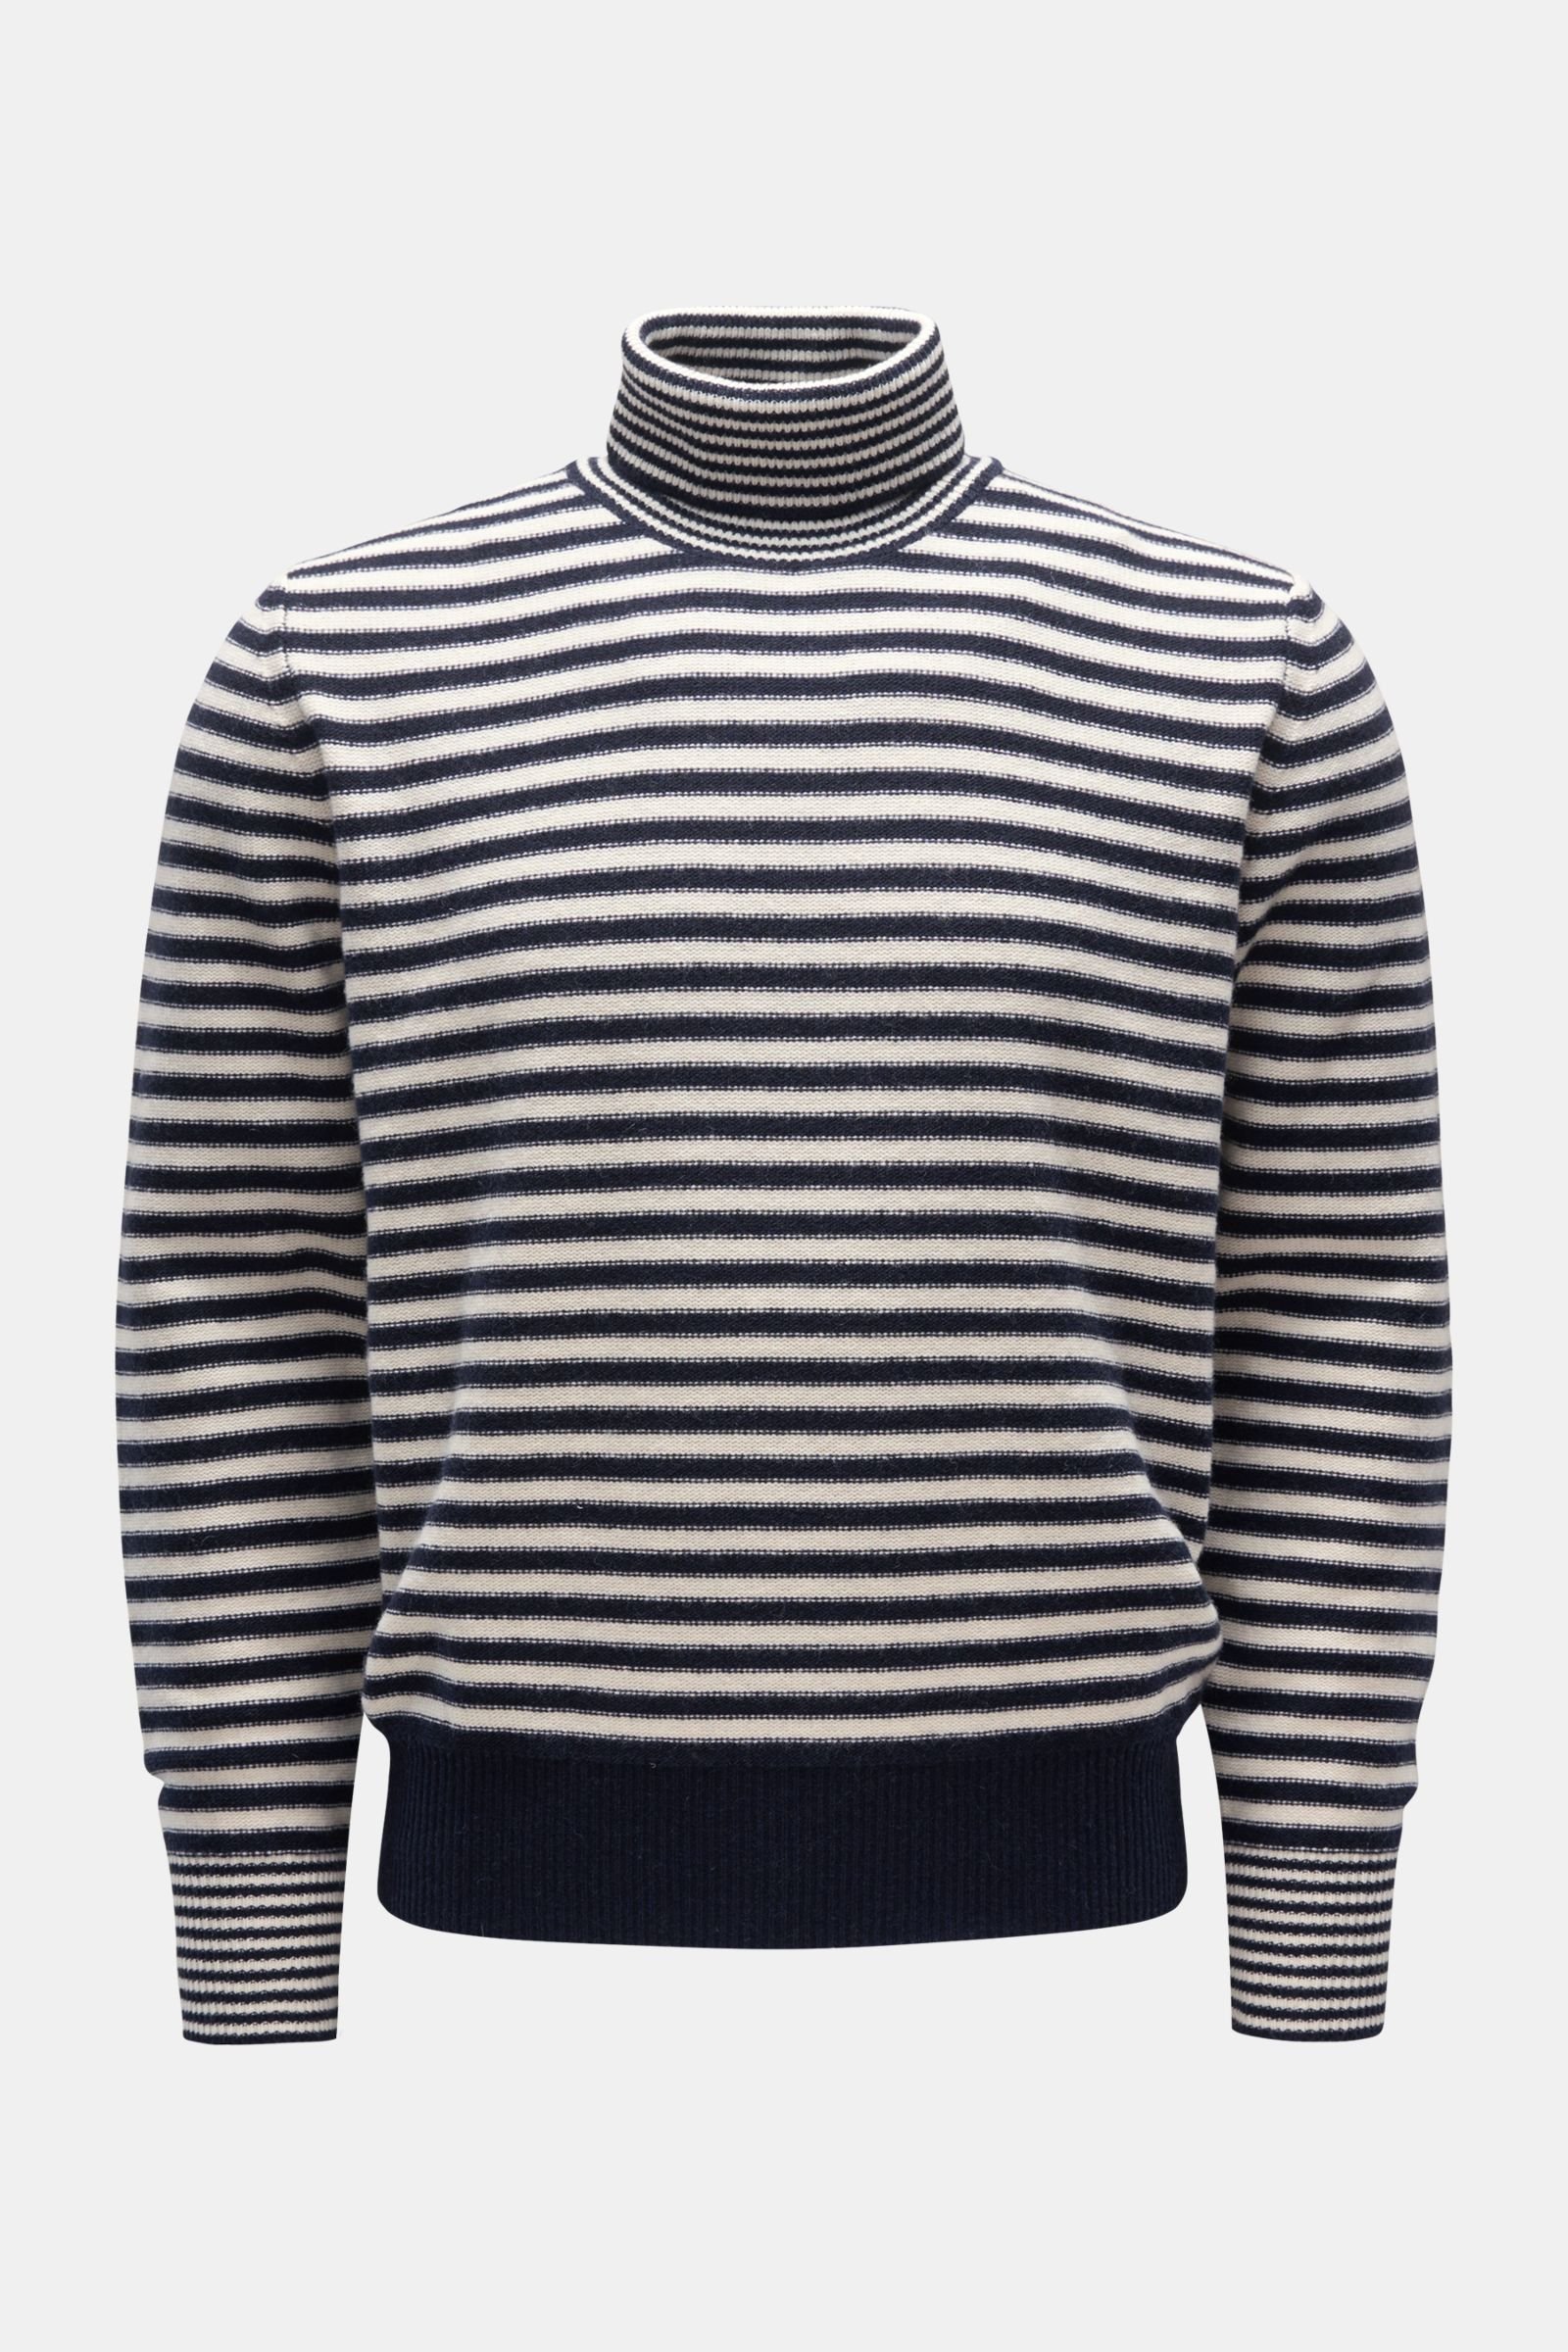 Turtleneck jumper white/navy striped